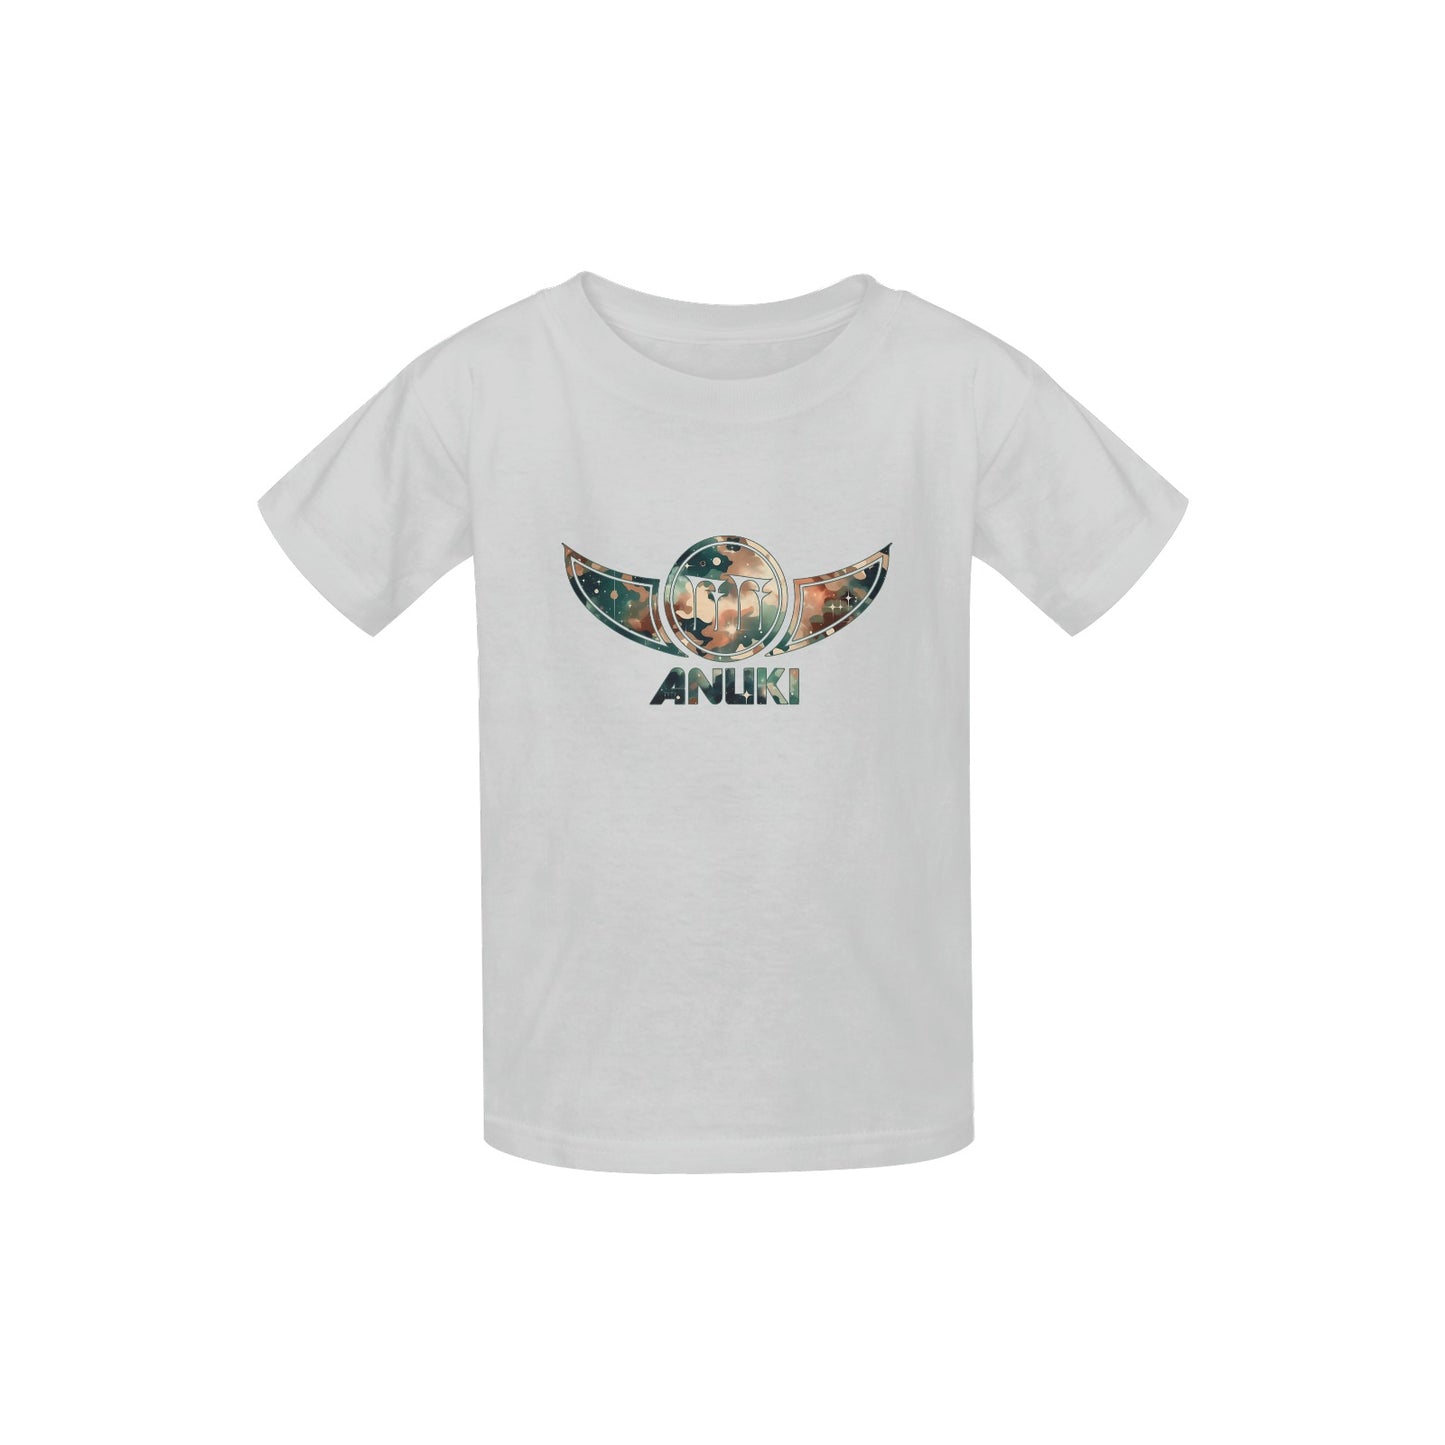 The Kids AnukiCamo T-shirts